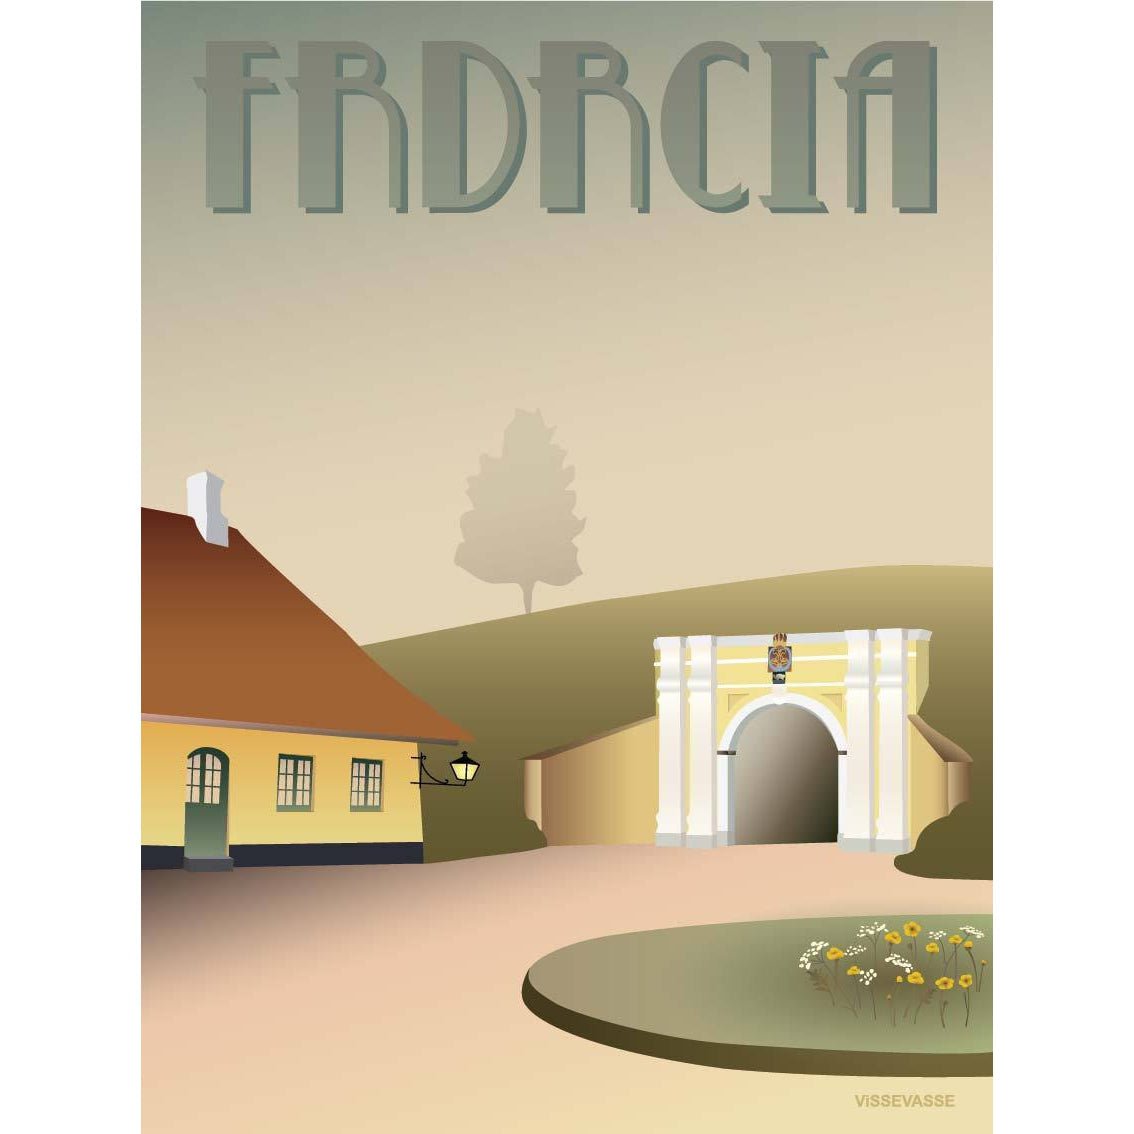 Vissevasse Fredericia City Gate Poster, 15x21 cm